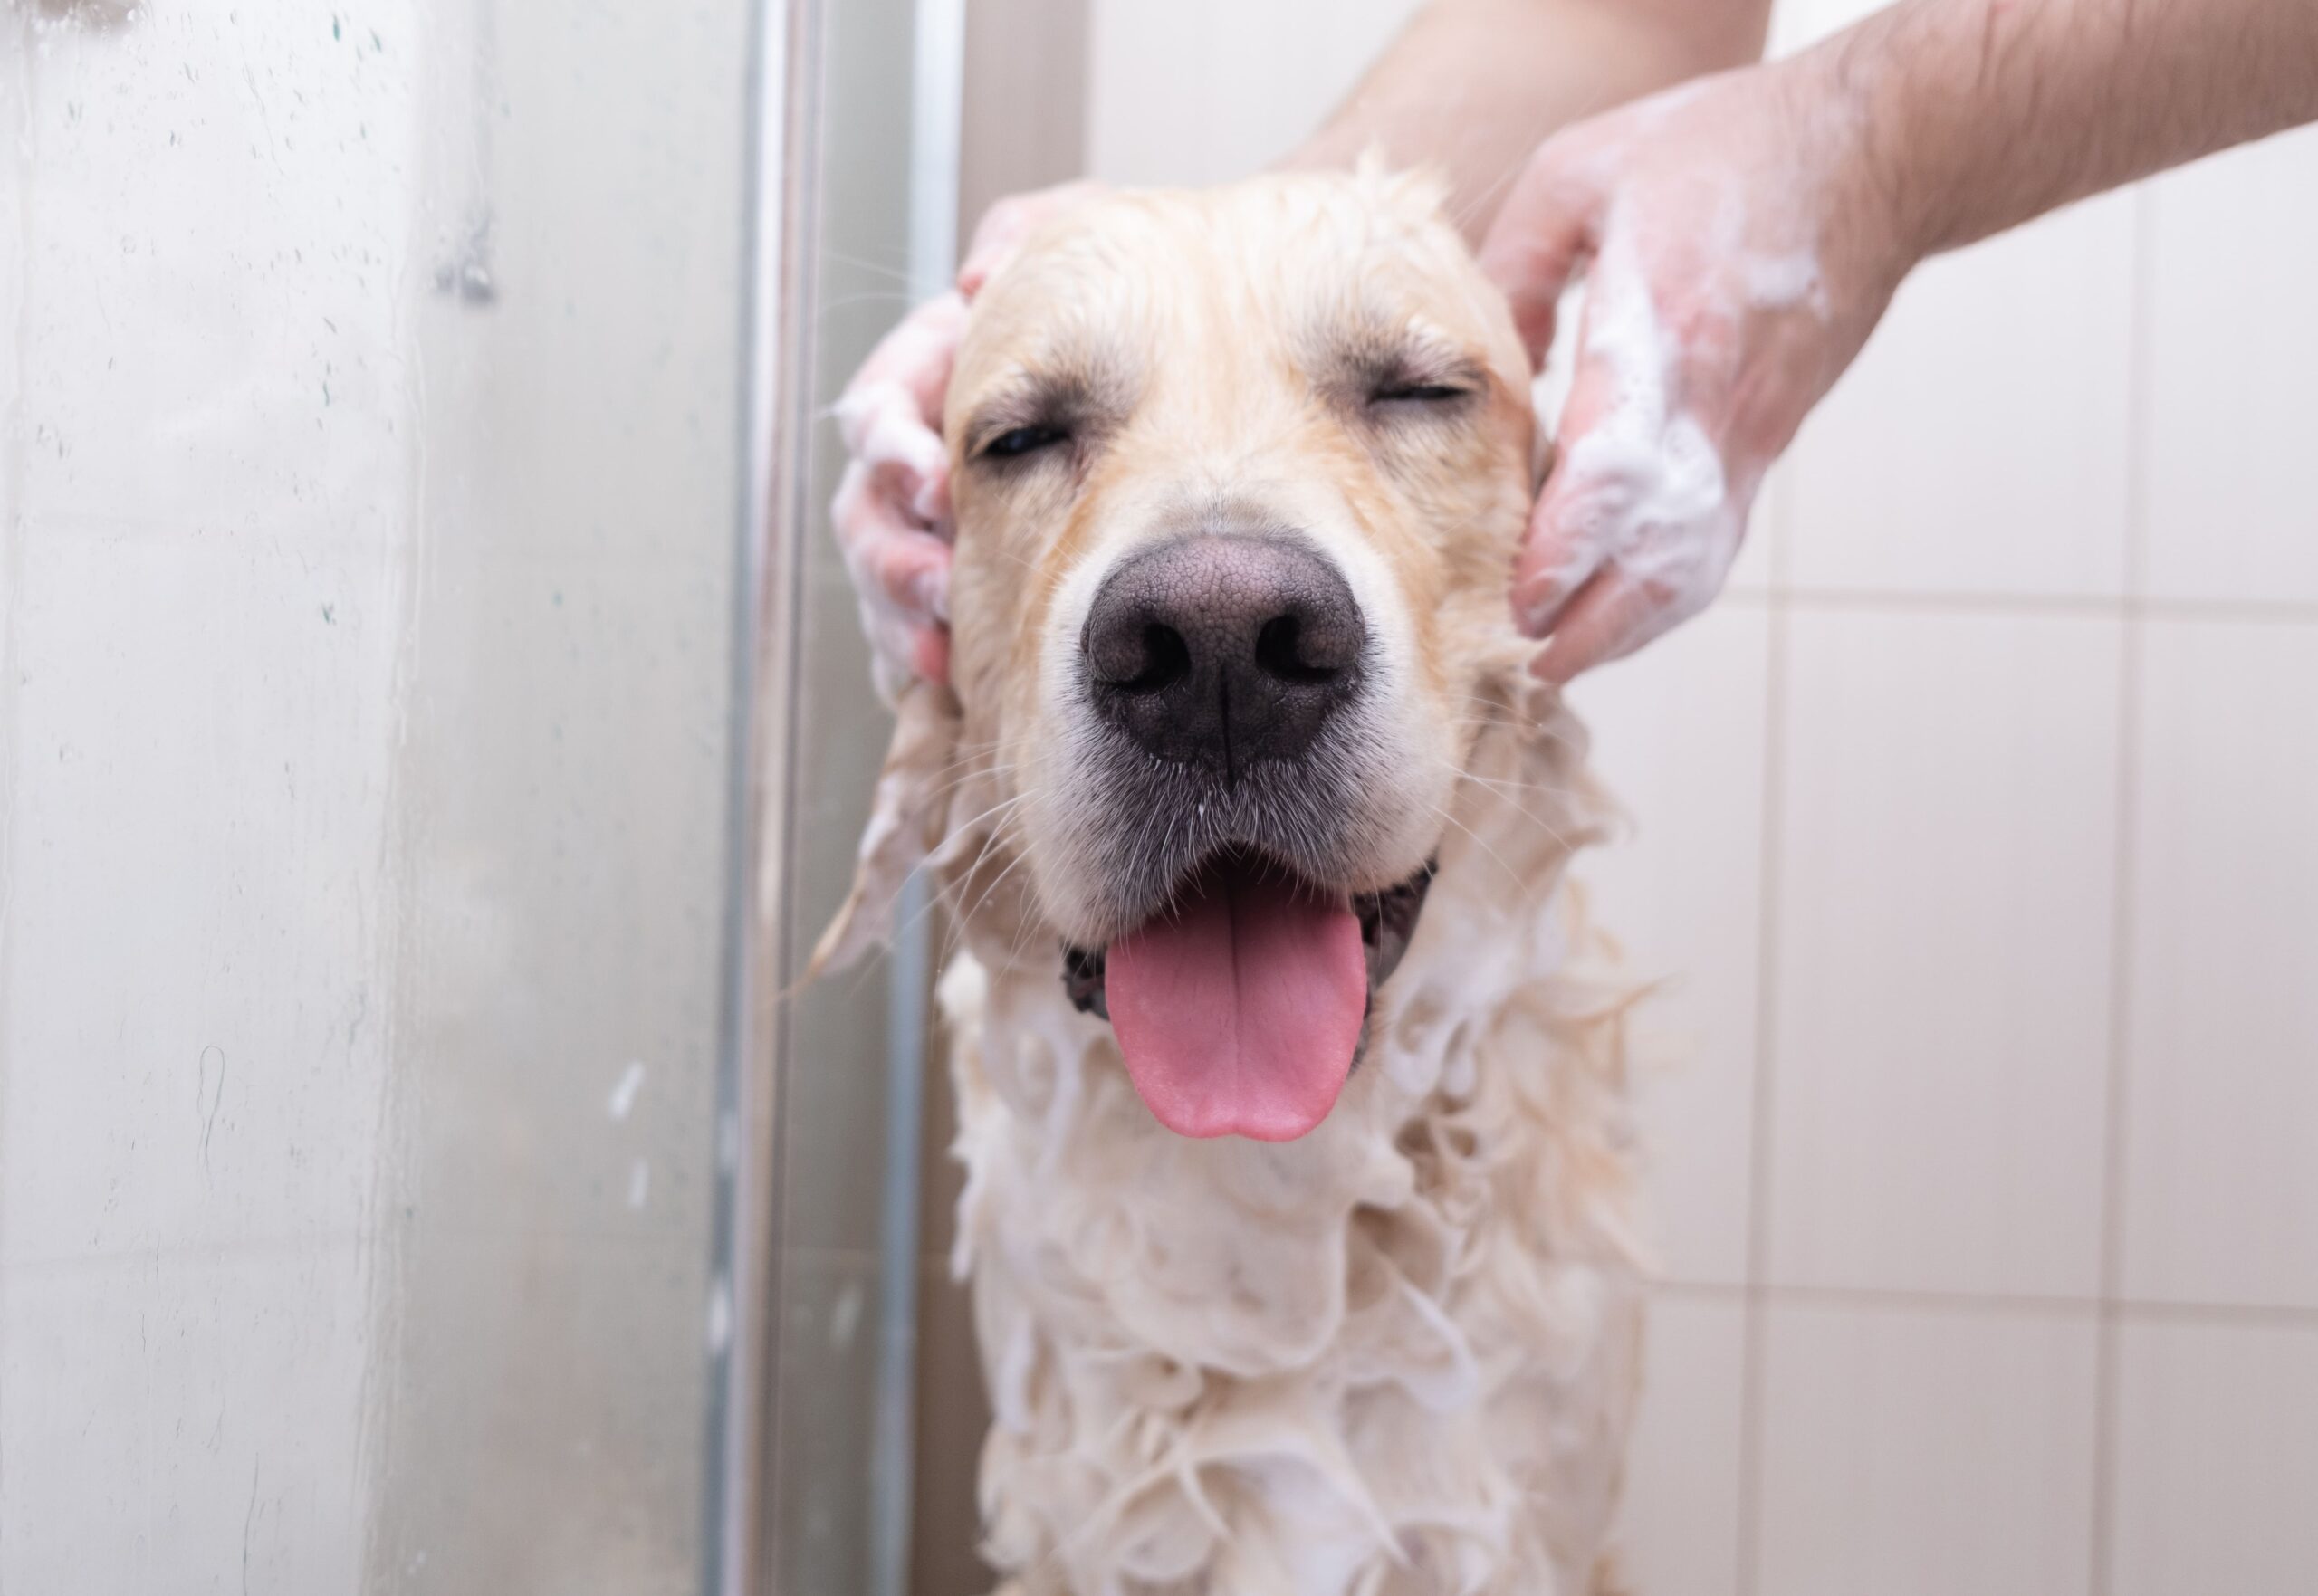 Difference Between Dog Shampoo and Human Shampoo